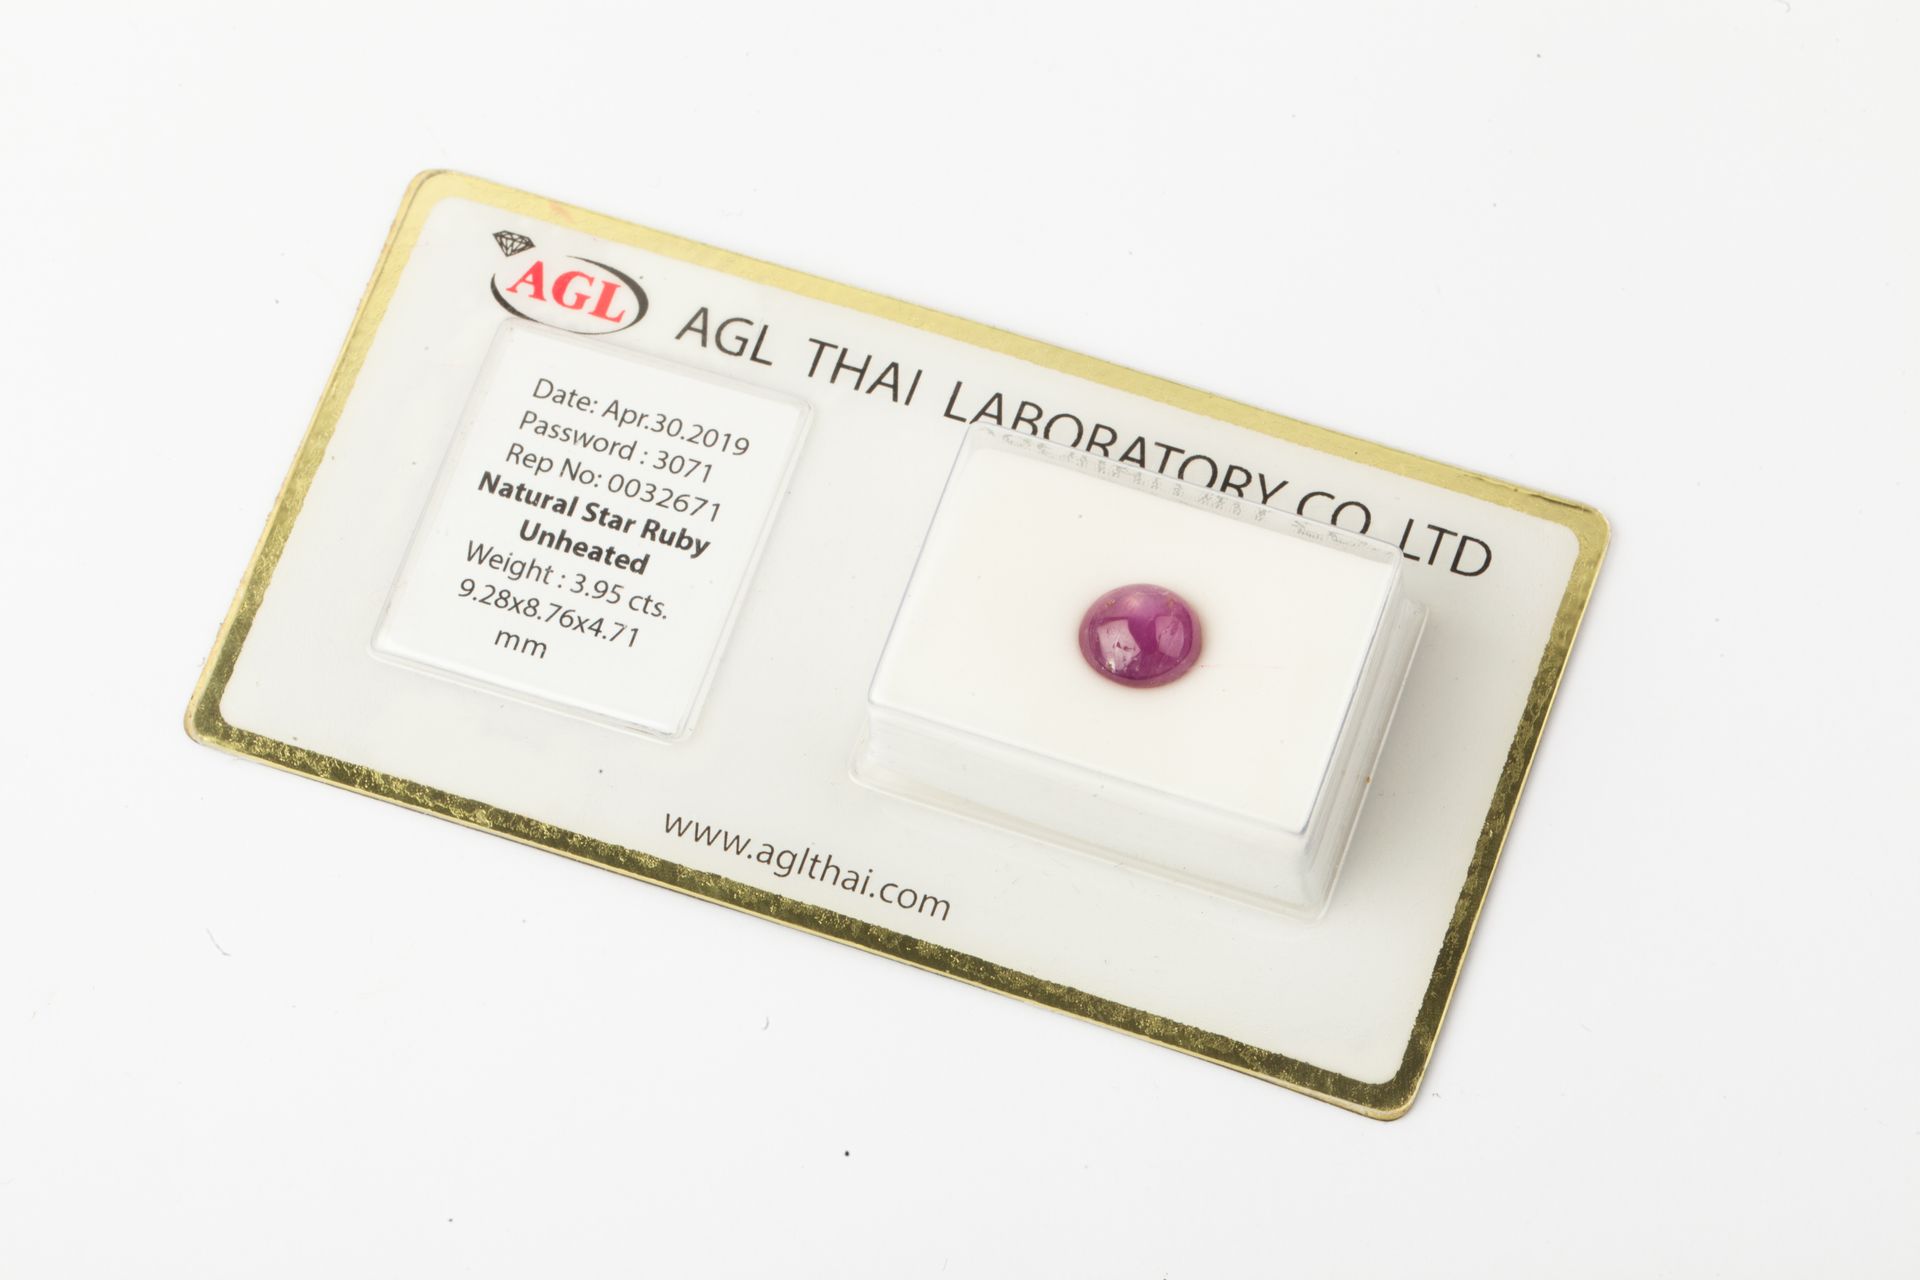 Null 印章下的星形红宝石凸圆形。

蓝宝石的重量：3,95克拉。

AGL（泰国宝石实验室）的报告显示没有观察到热处理。